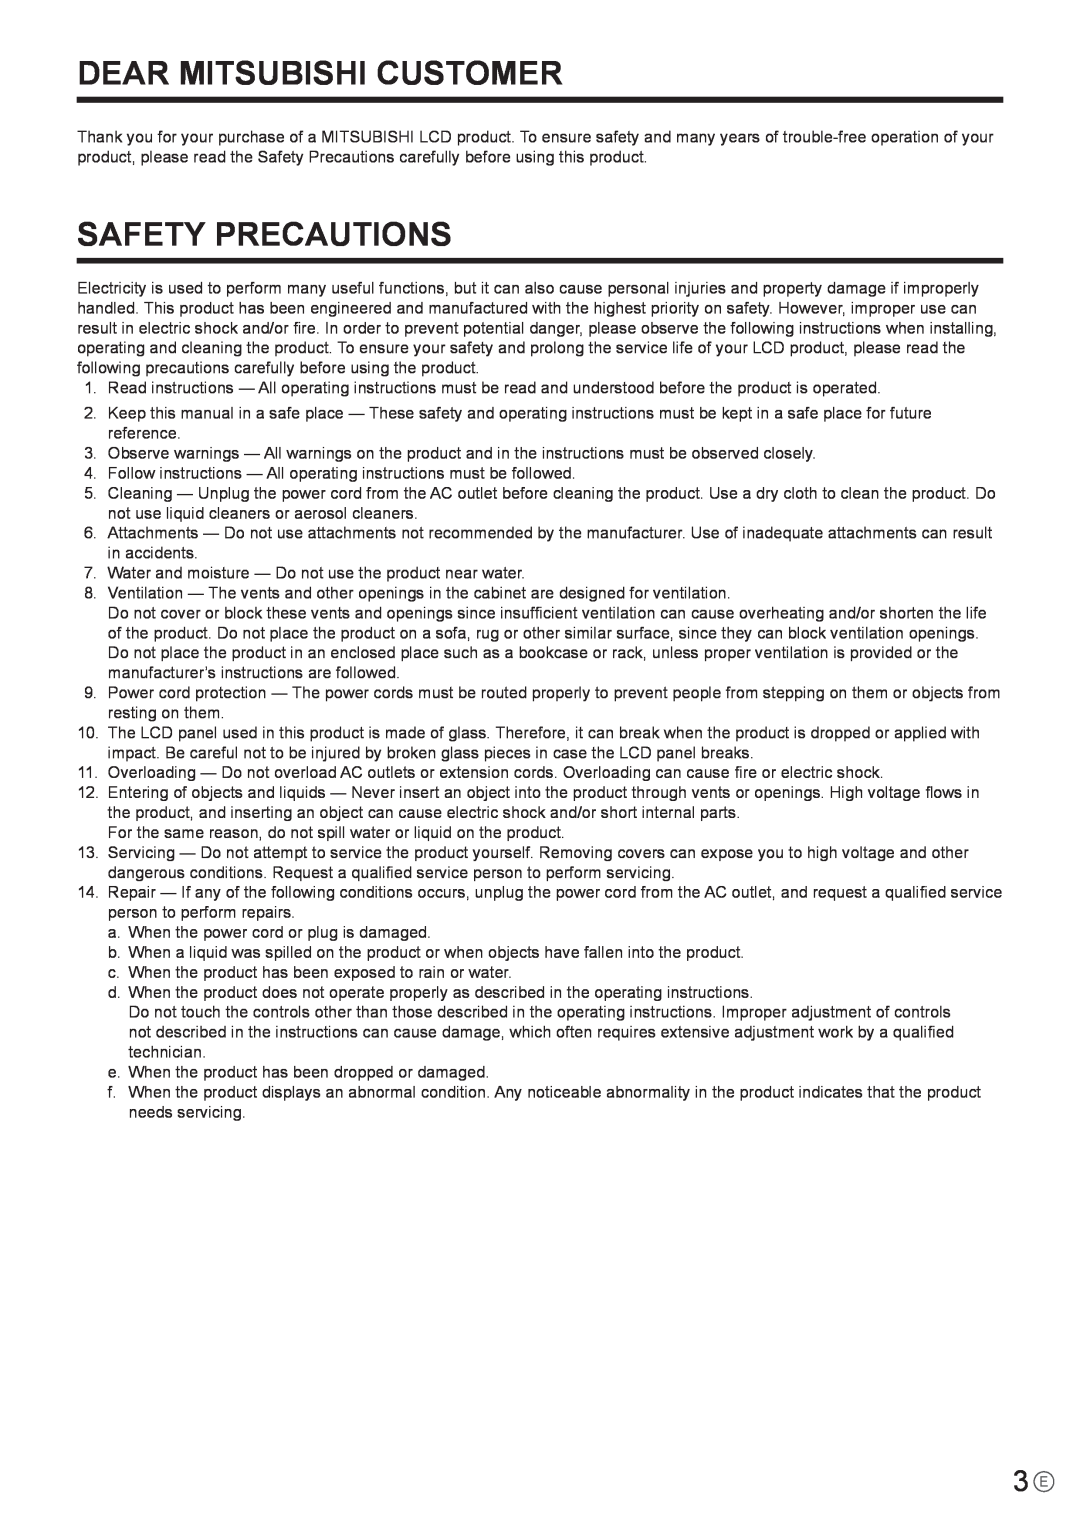 Mitsubishi Electronics LDT651P operation manual Dear Mitsubishi Customer, Safety Precautions 